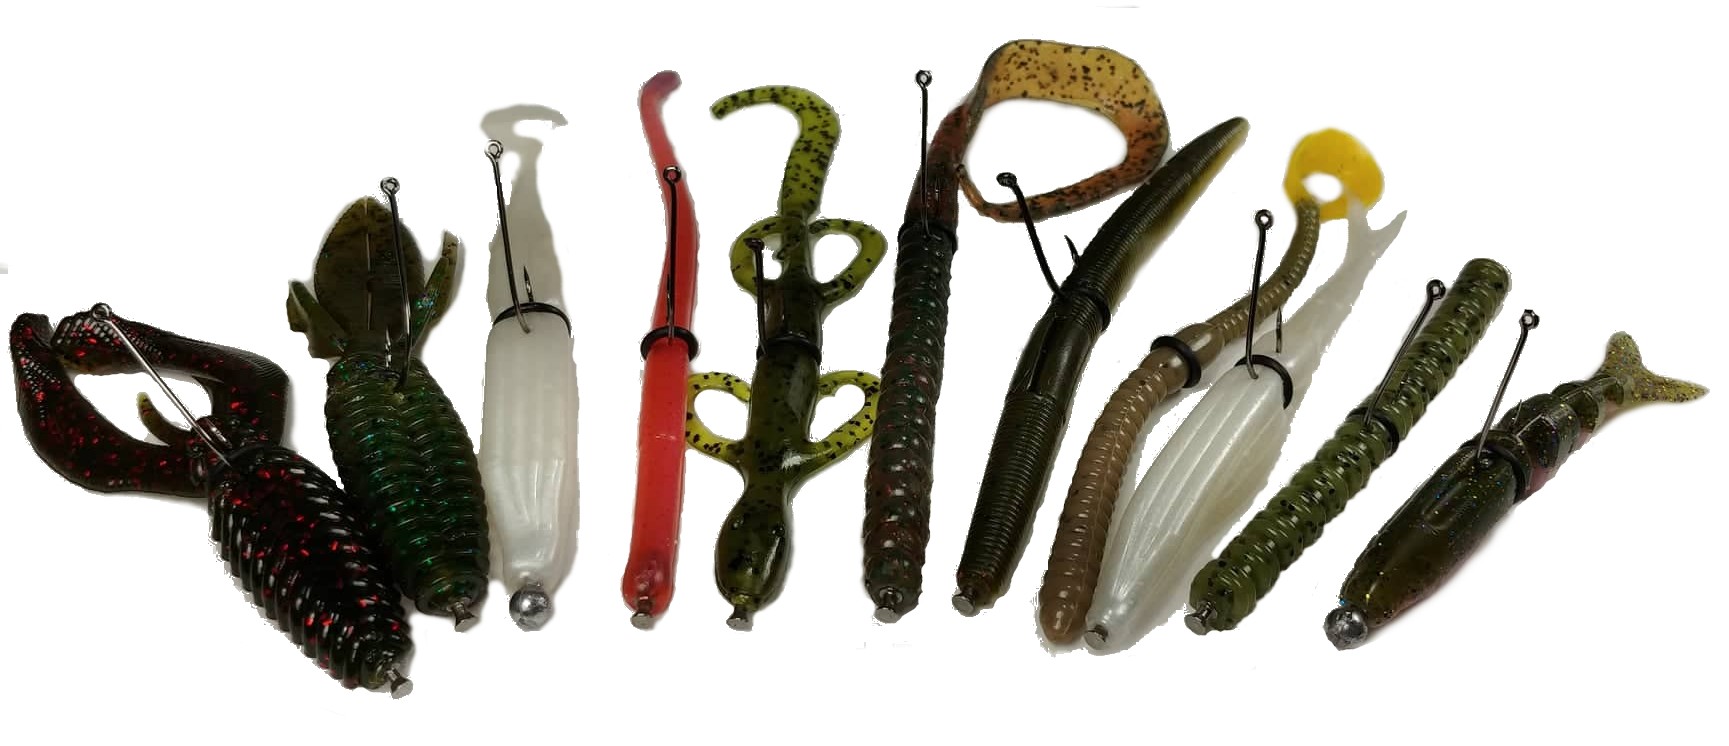 New Hot Wrom Rig O-Ring Tool Plastic Worms Senkos Stick Baits Fishing Equipment 